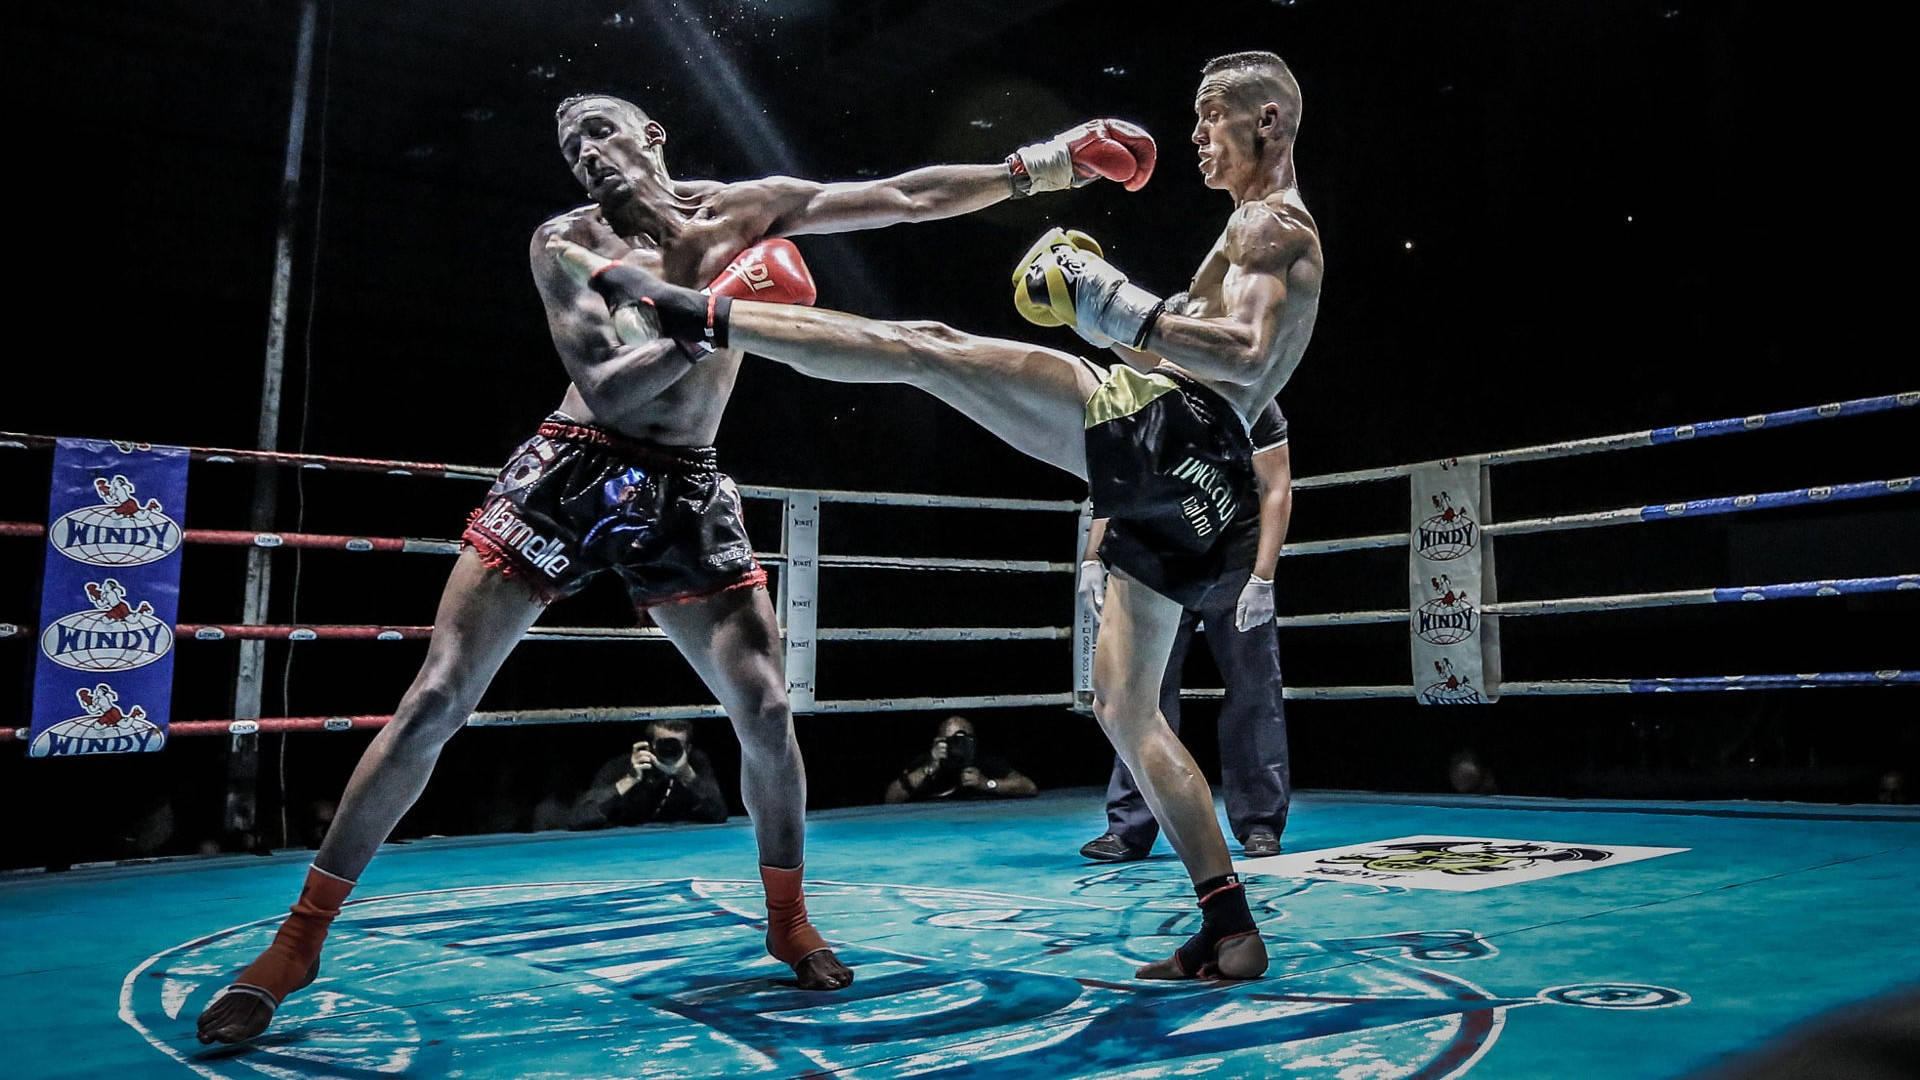 City Kickboxing Poster – Fight Bro Customs